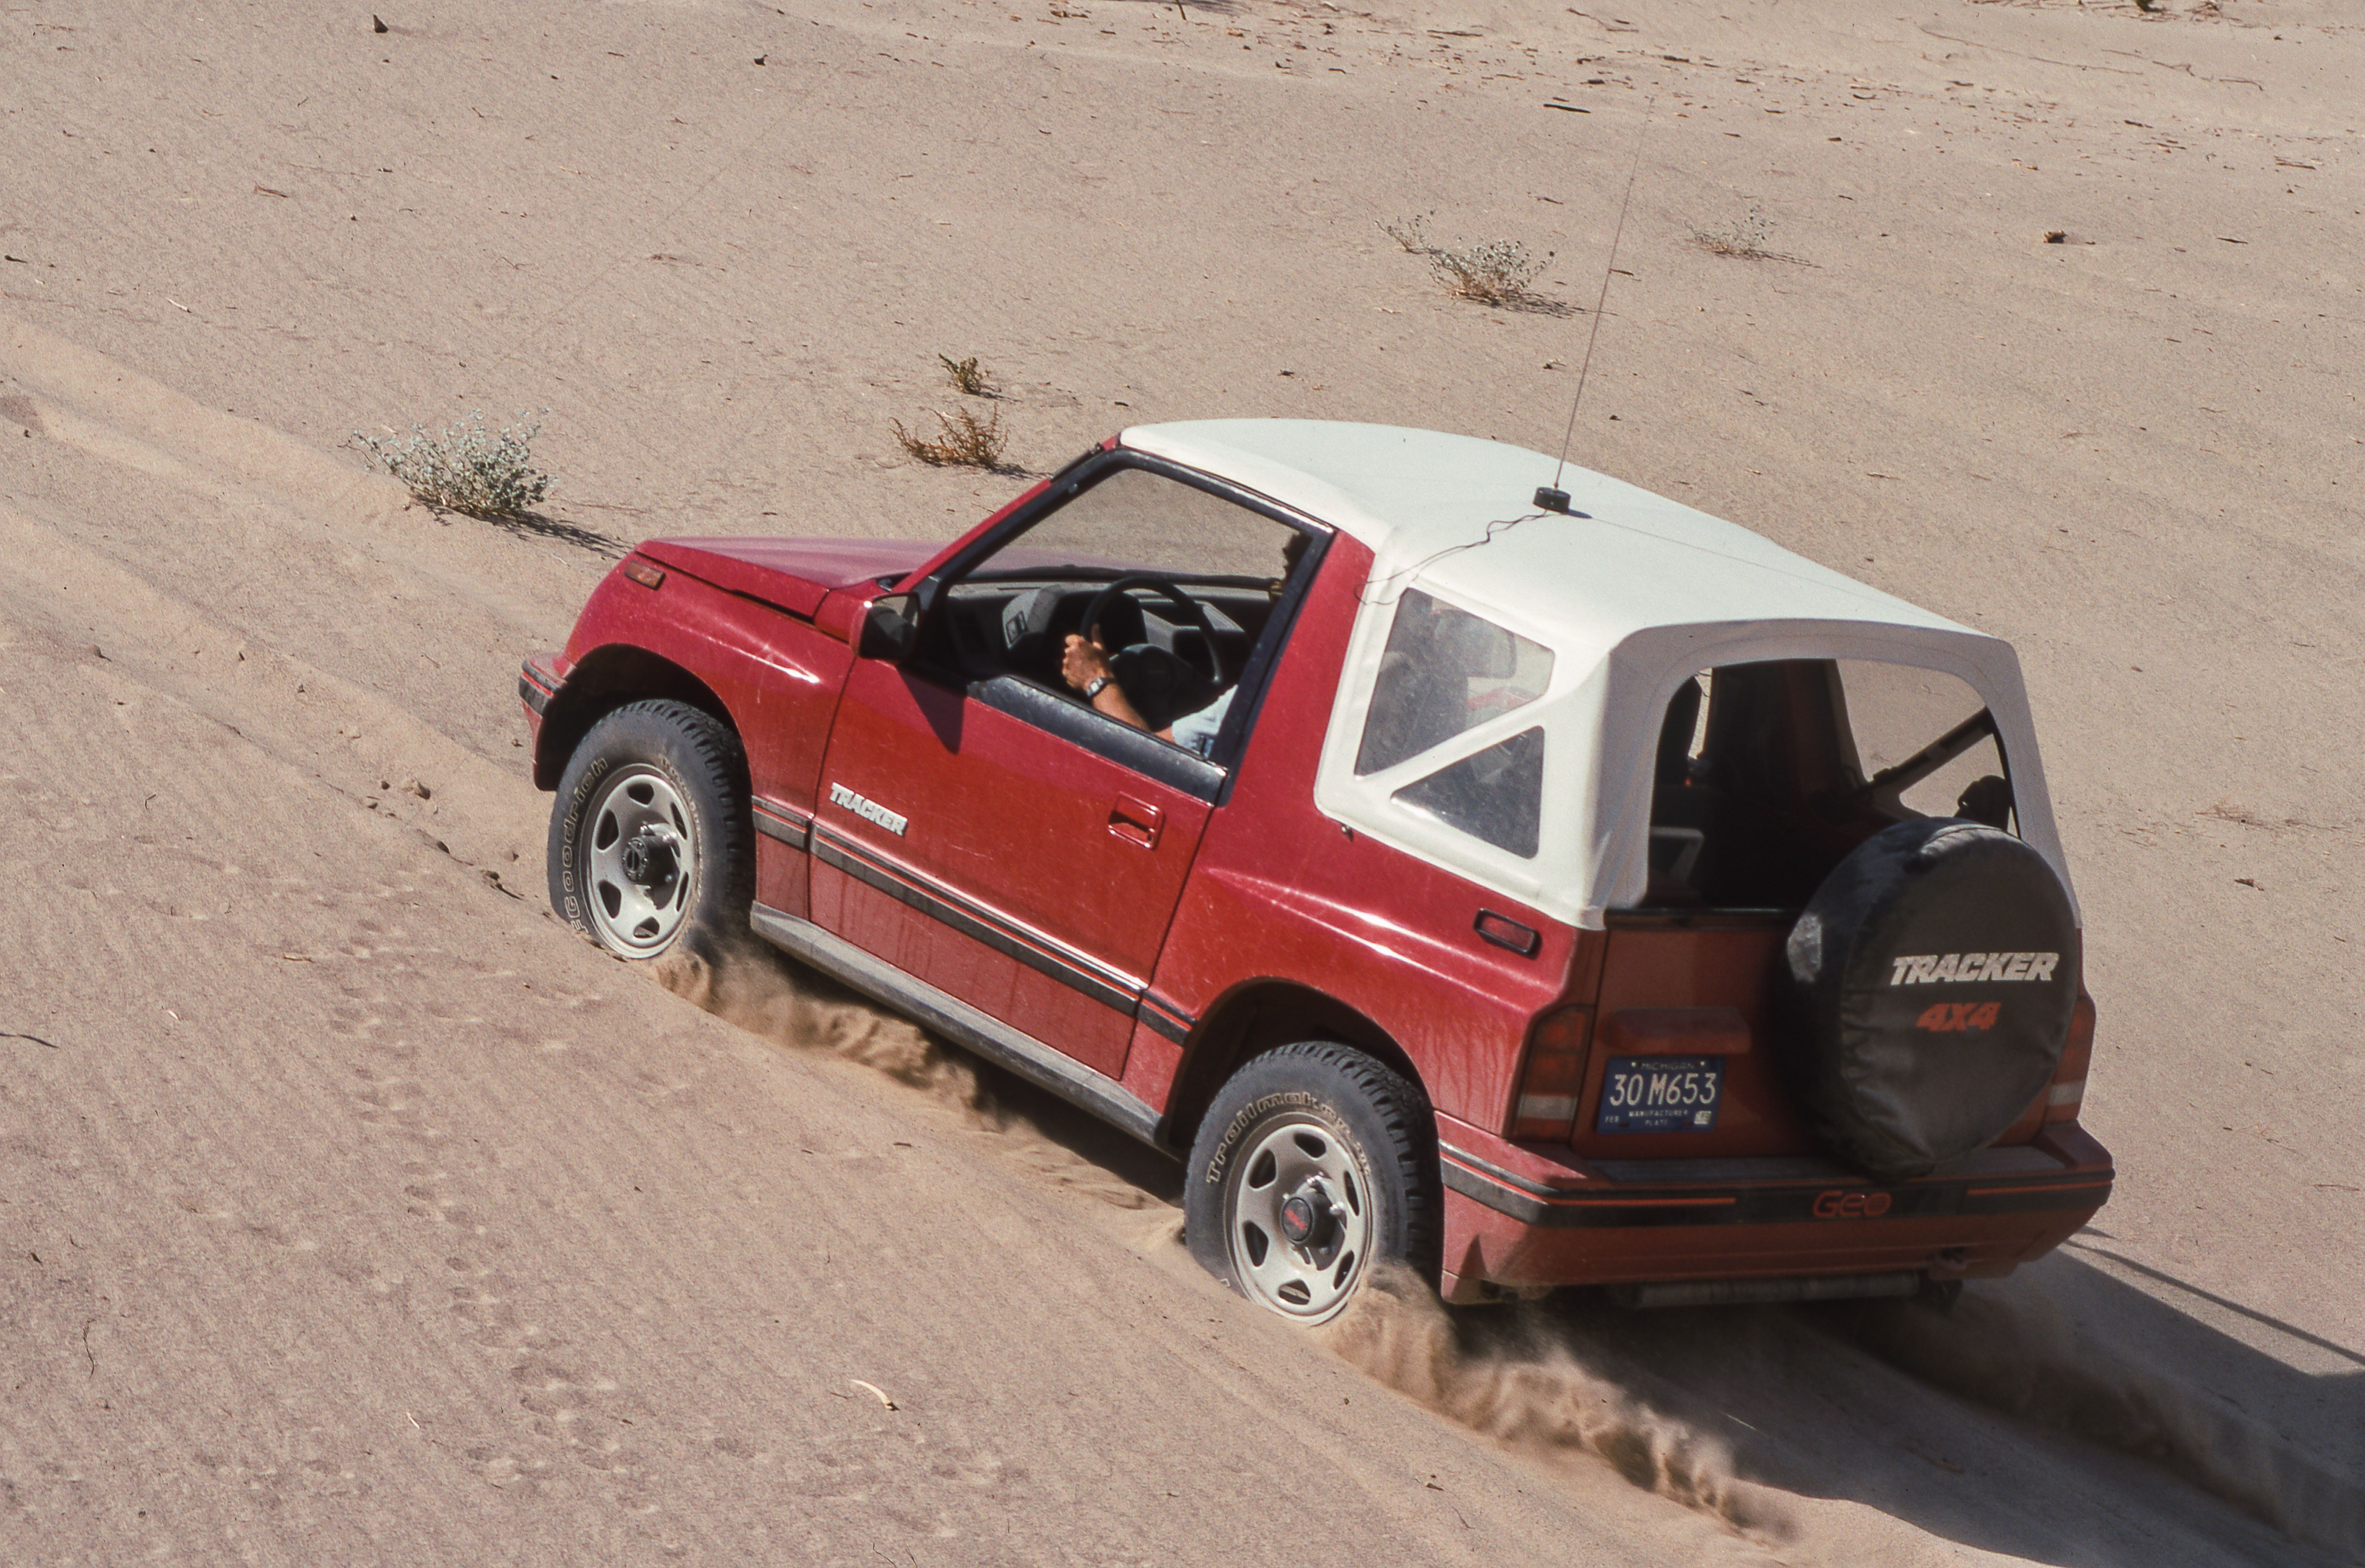 Four 1989 4X4S From Jeep, Suzuki, Isuzu And Geo Hit The Trail